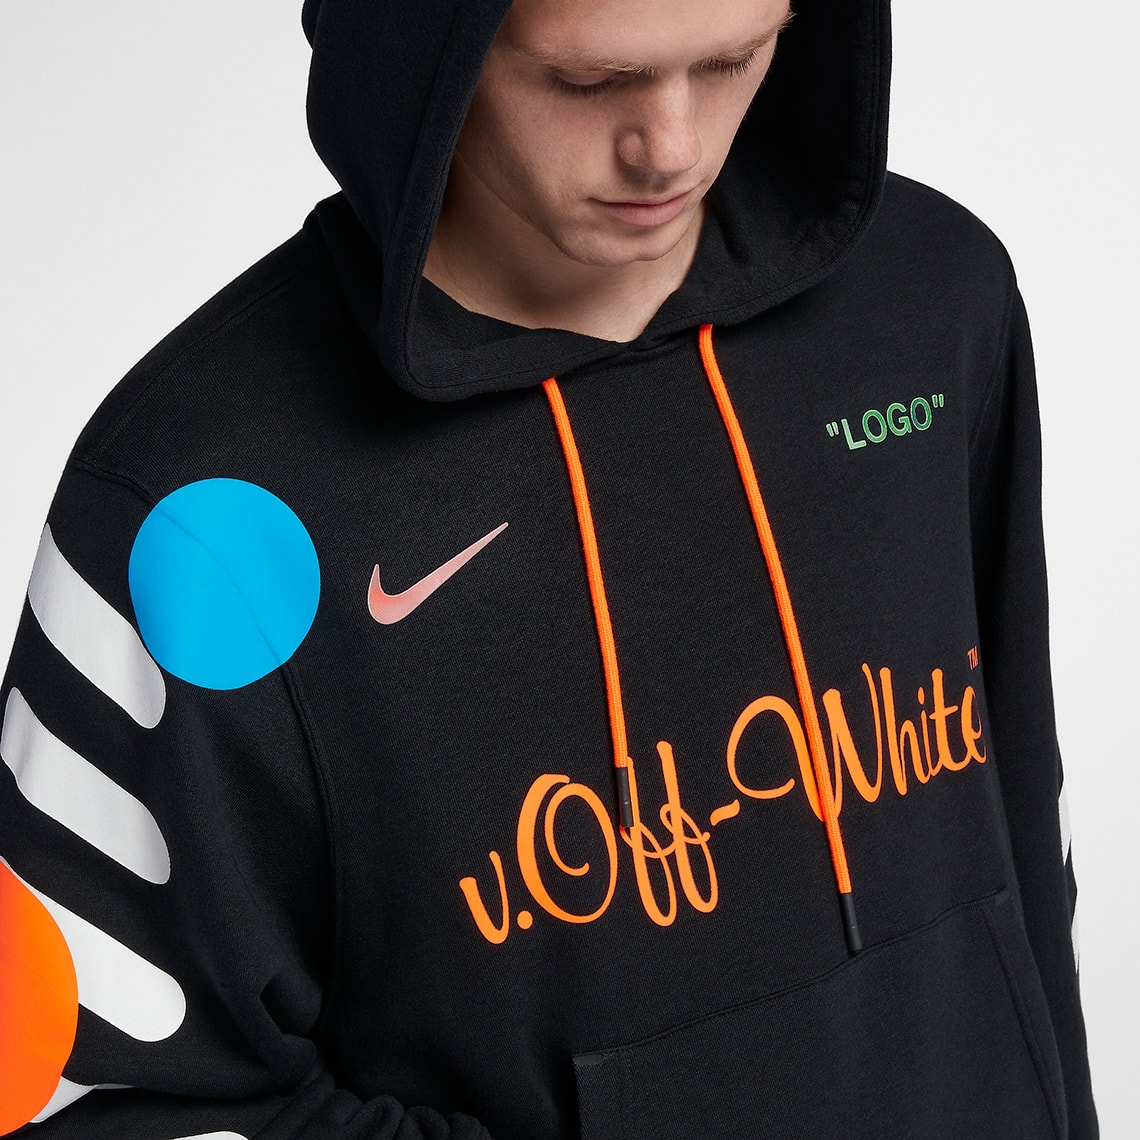 Off-White™ x Nike 聯名「Football, Mon Amour」系列完整單品一覽